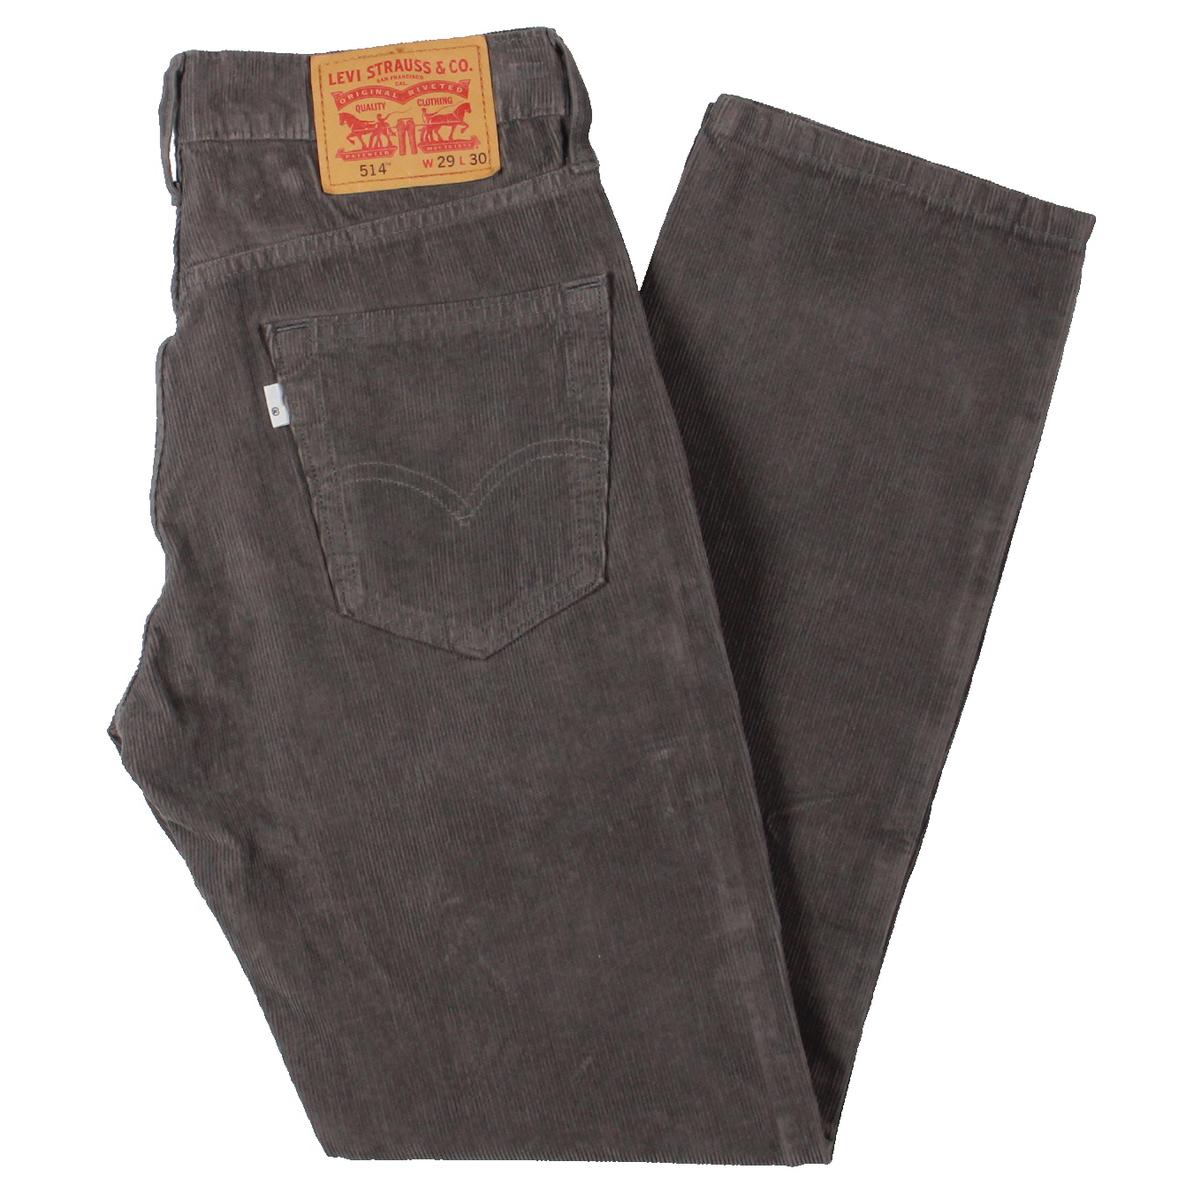 Levi's Mens 514 Gray Corduroy Regular Fit Straight Leg Jeans 29/30 BHFO ...